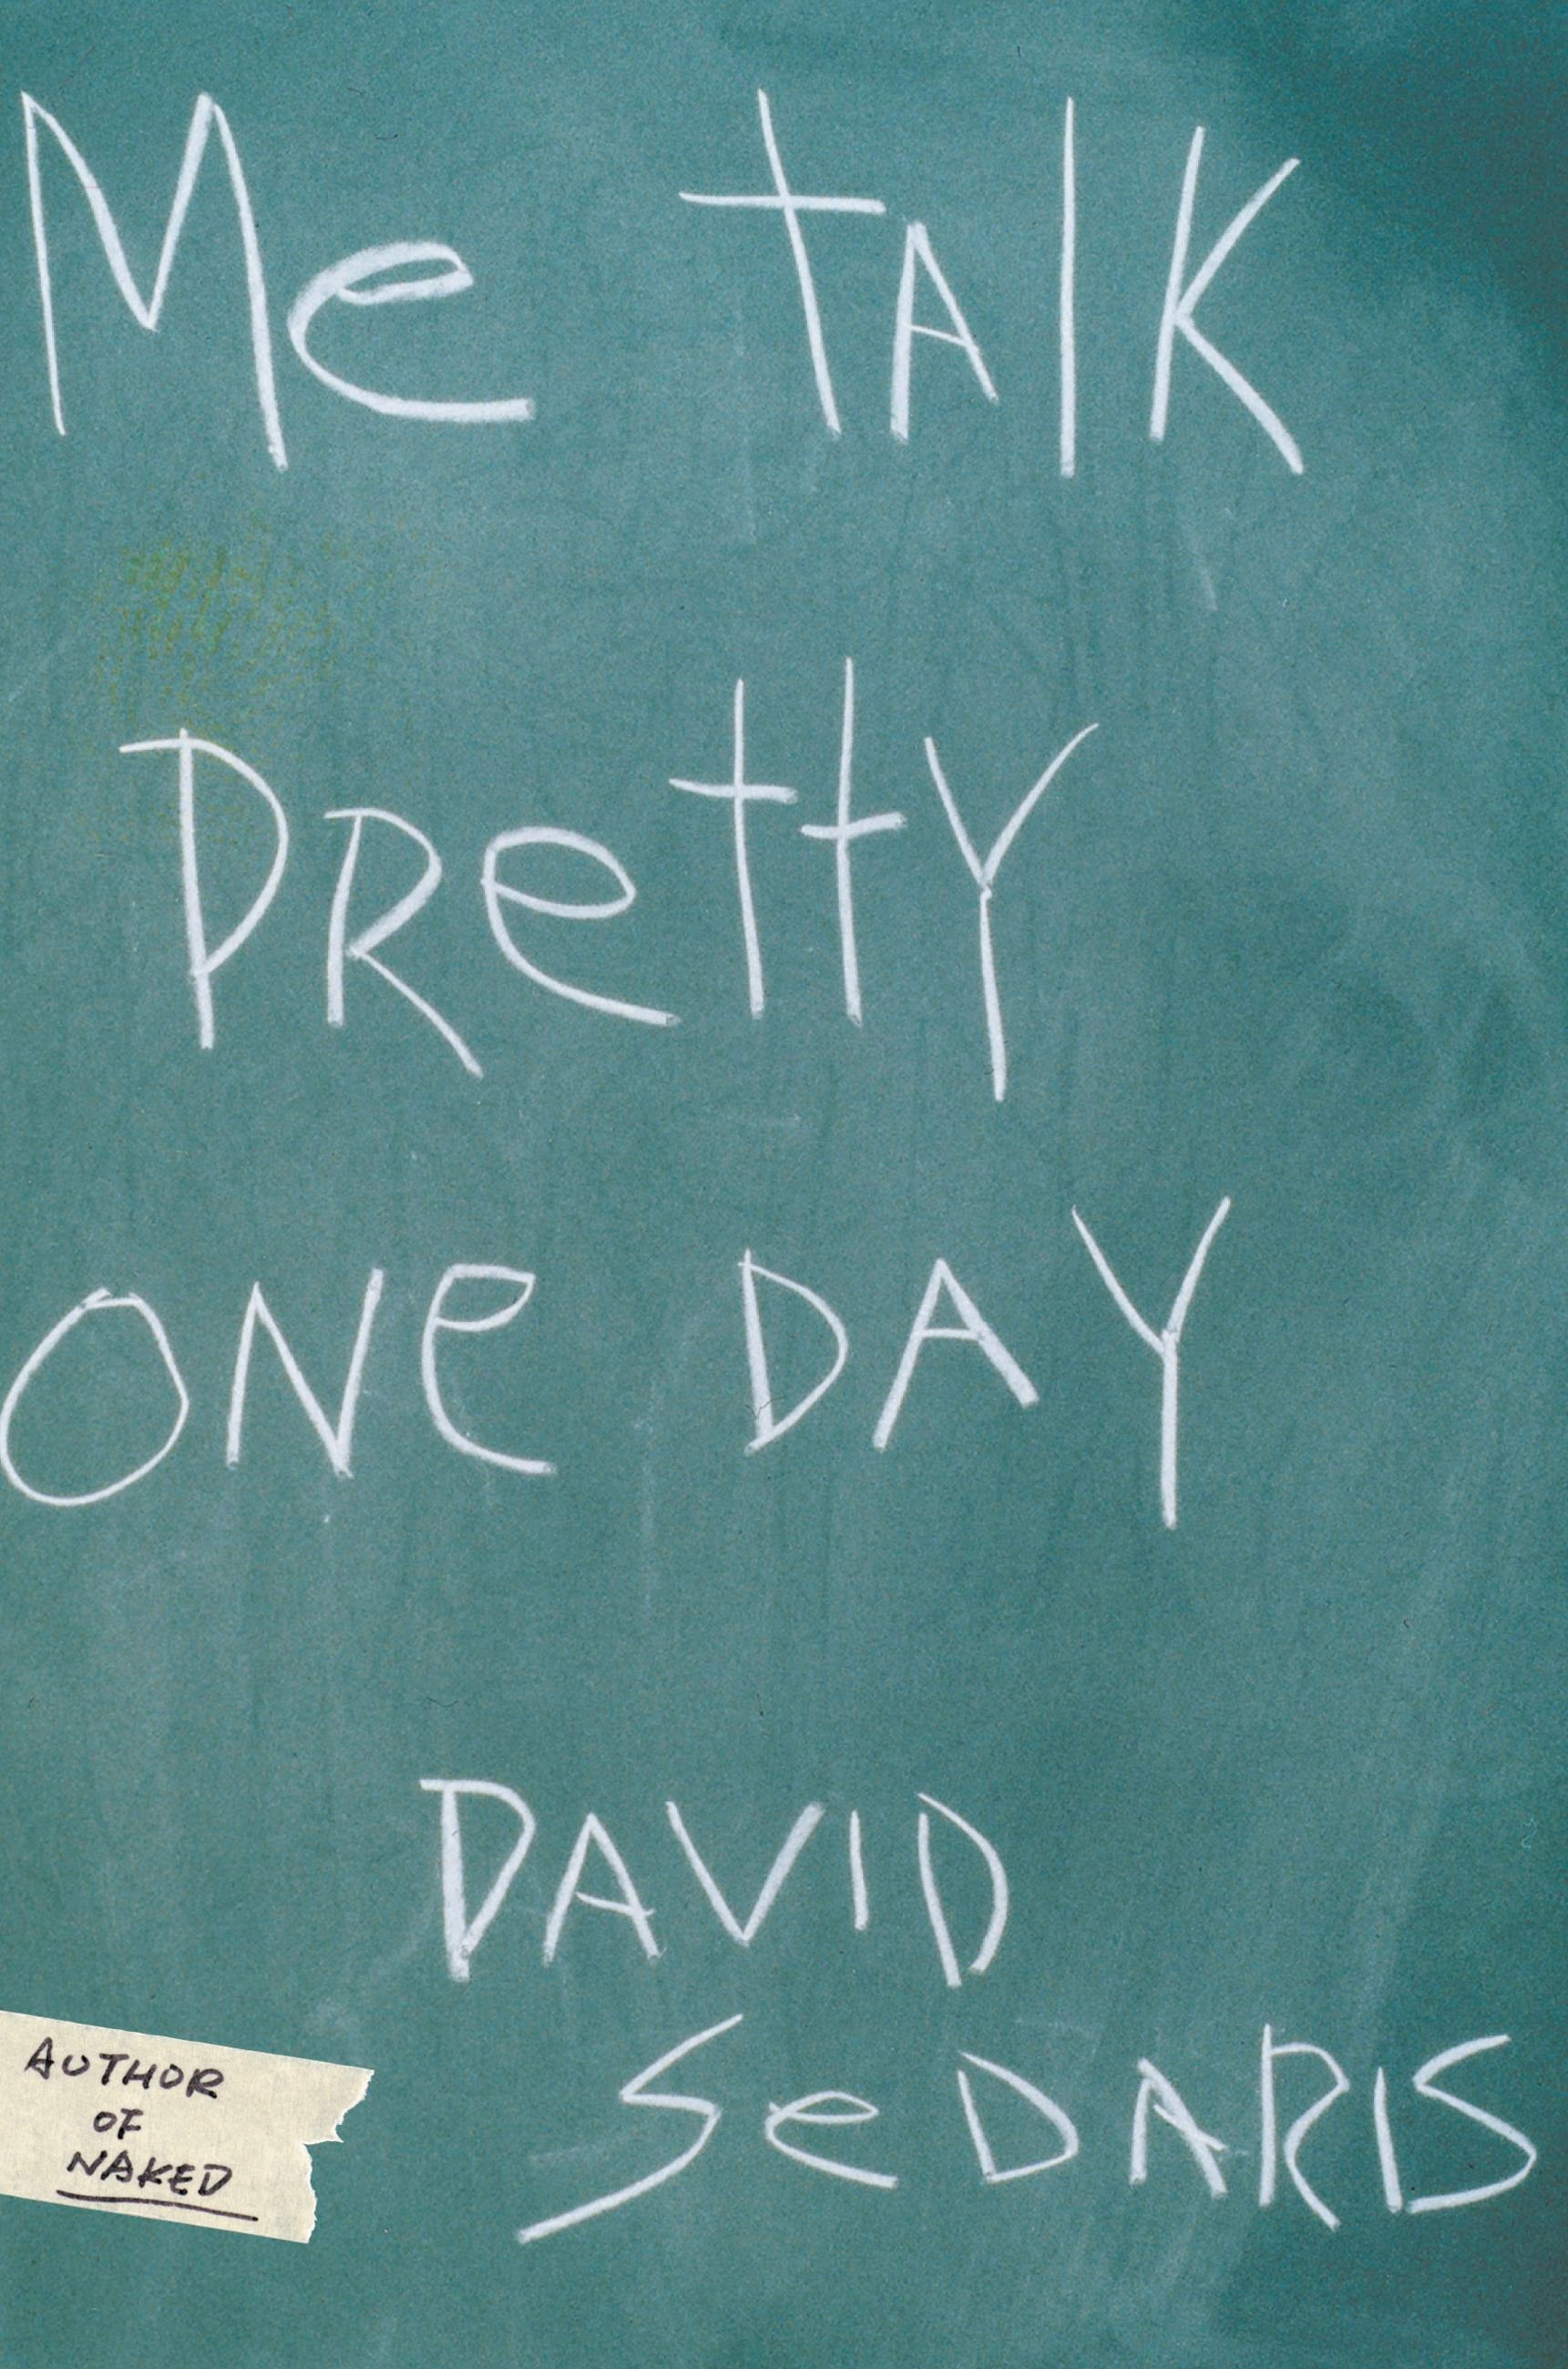 'Me Talk Pretty One Day' by David Sedaris